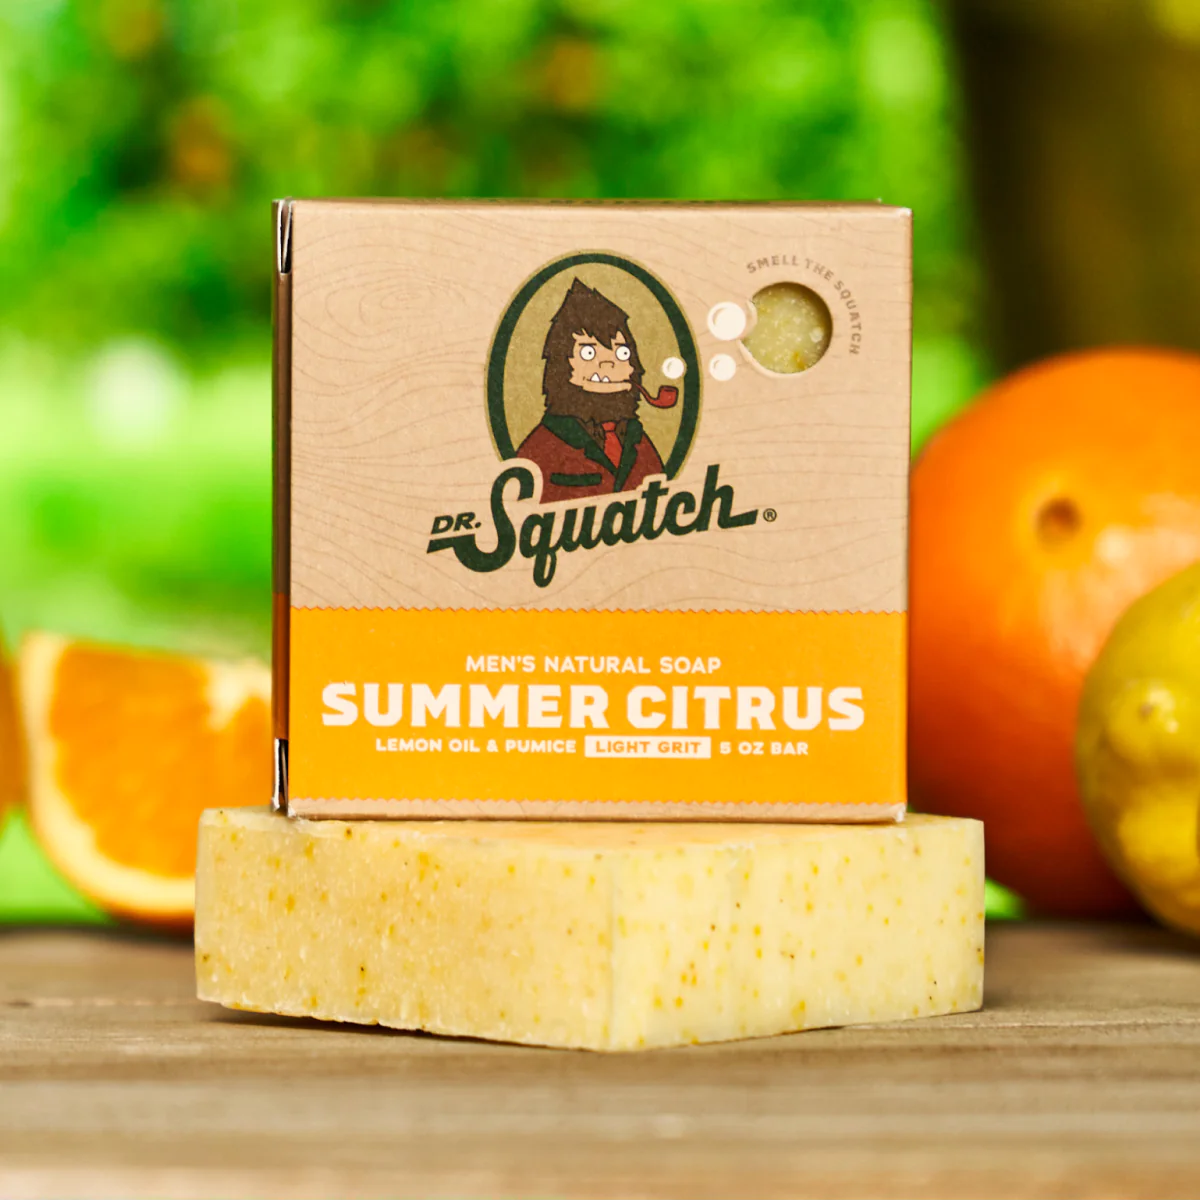 Summer Citrus Soap Bar Dr. Squatch